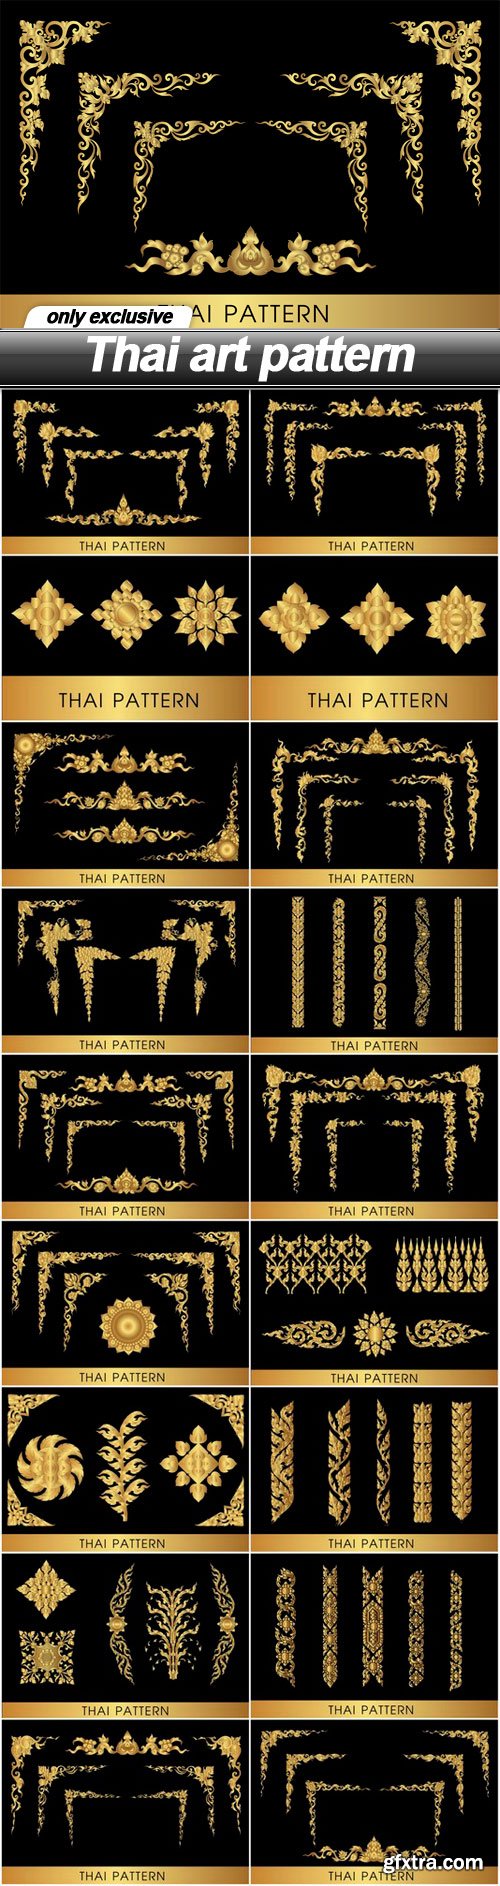 Thai art pattern - 19 EPS